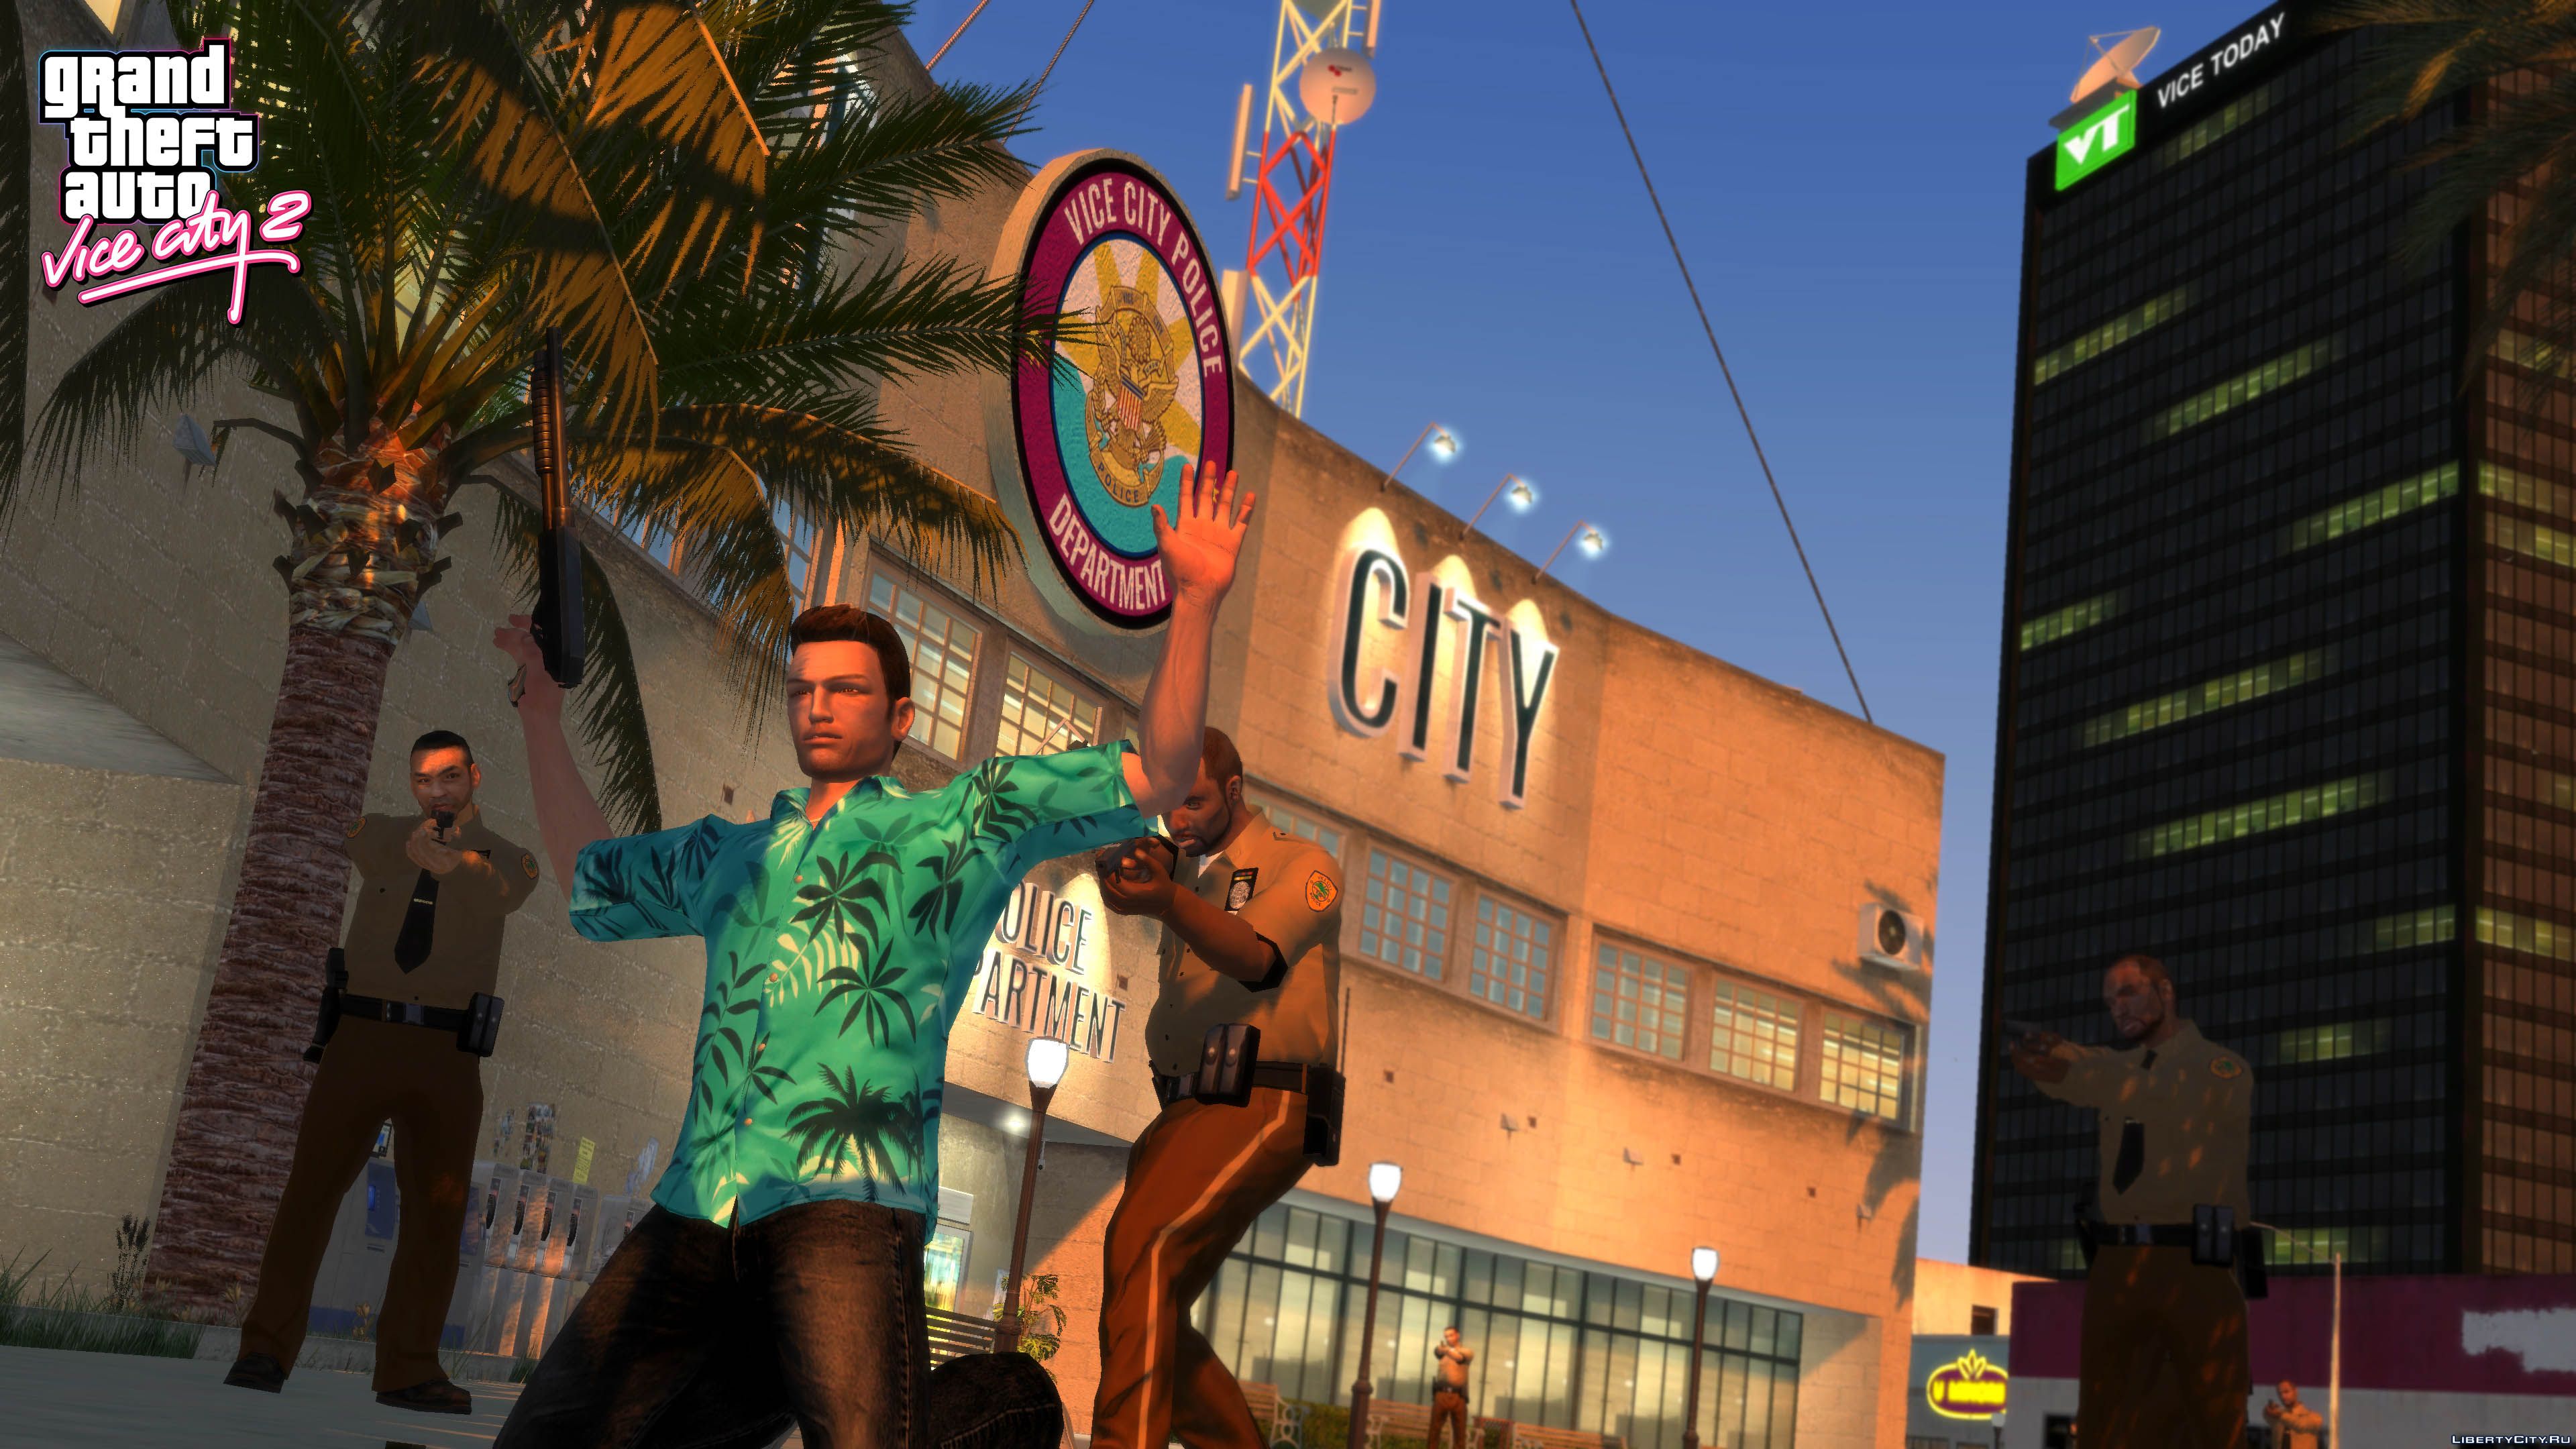 Grand Theft Auto Vice City 2 Remaster 1 